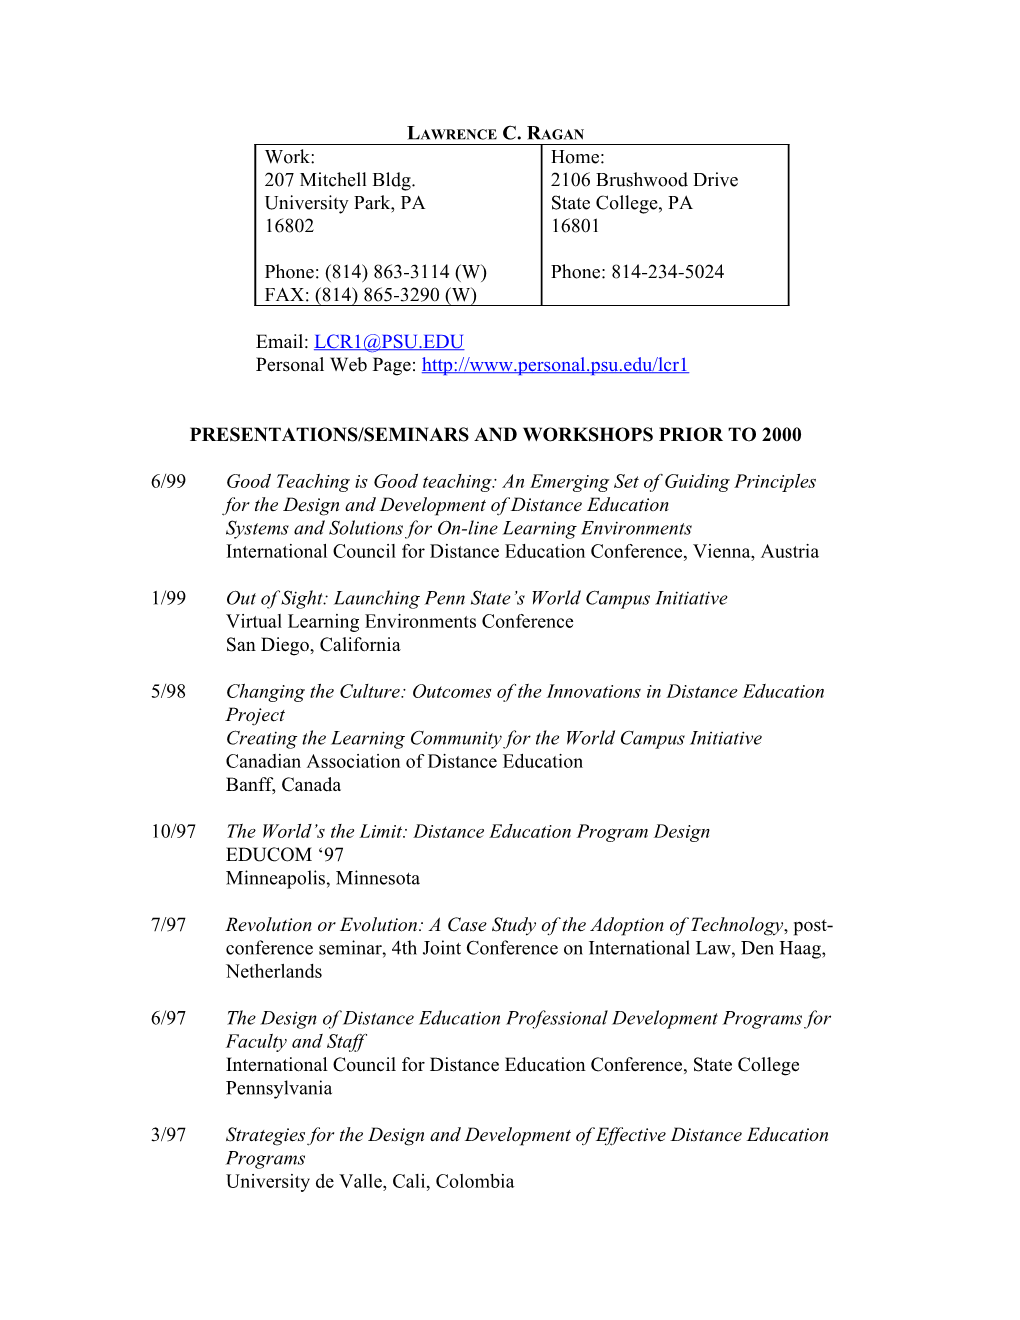 Presentations/Seminars and Workshops Prior to 2000